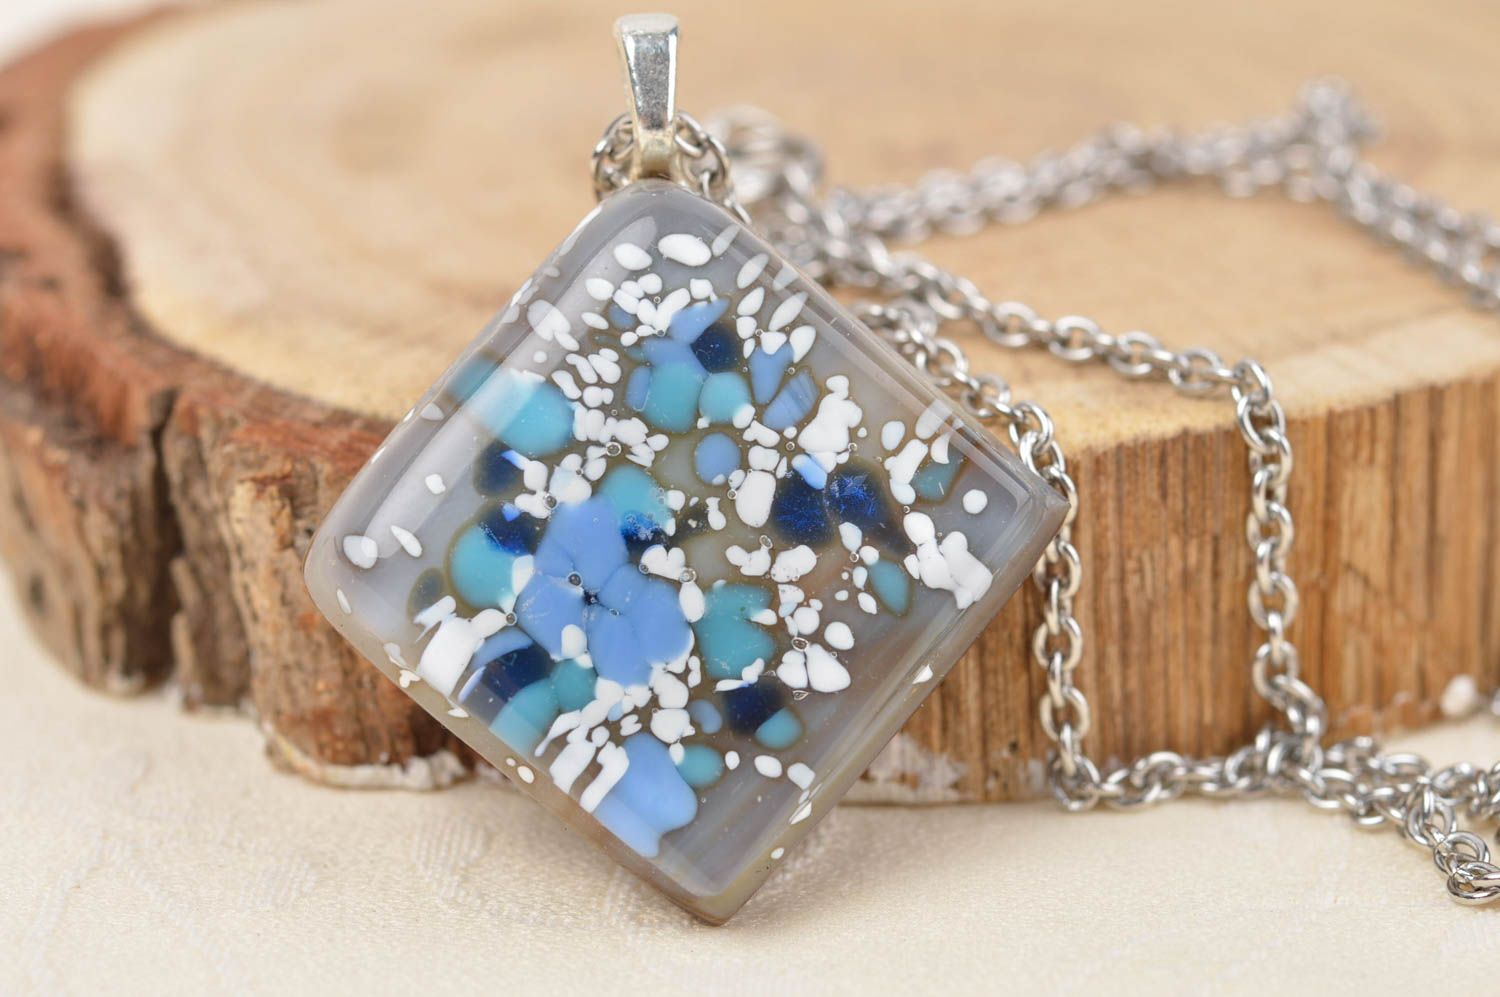 Handmade pendant designer accessory unusual jewelry gift ideas gift for women photo 1